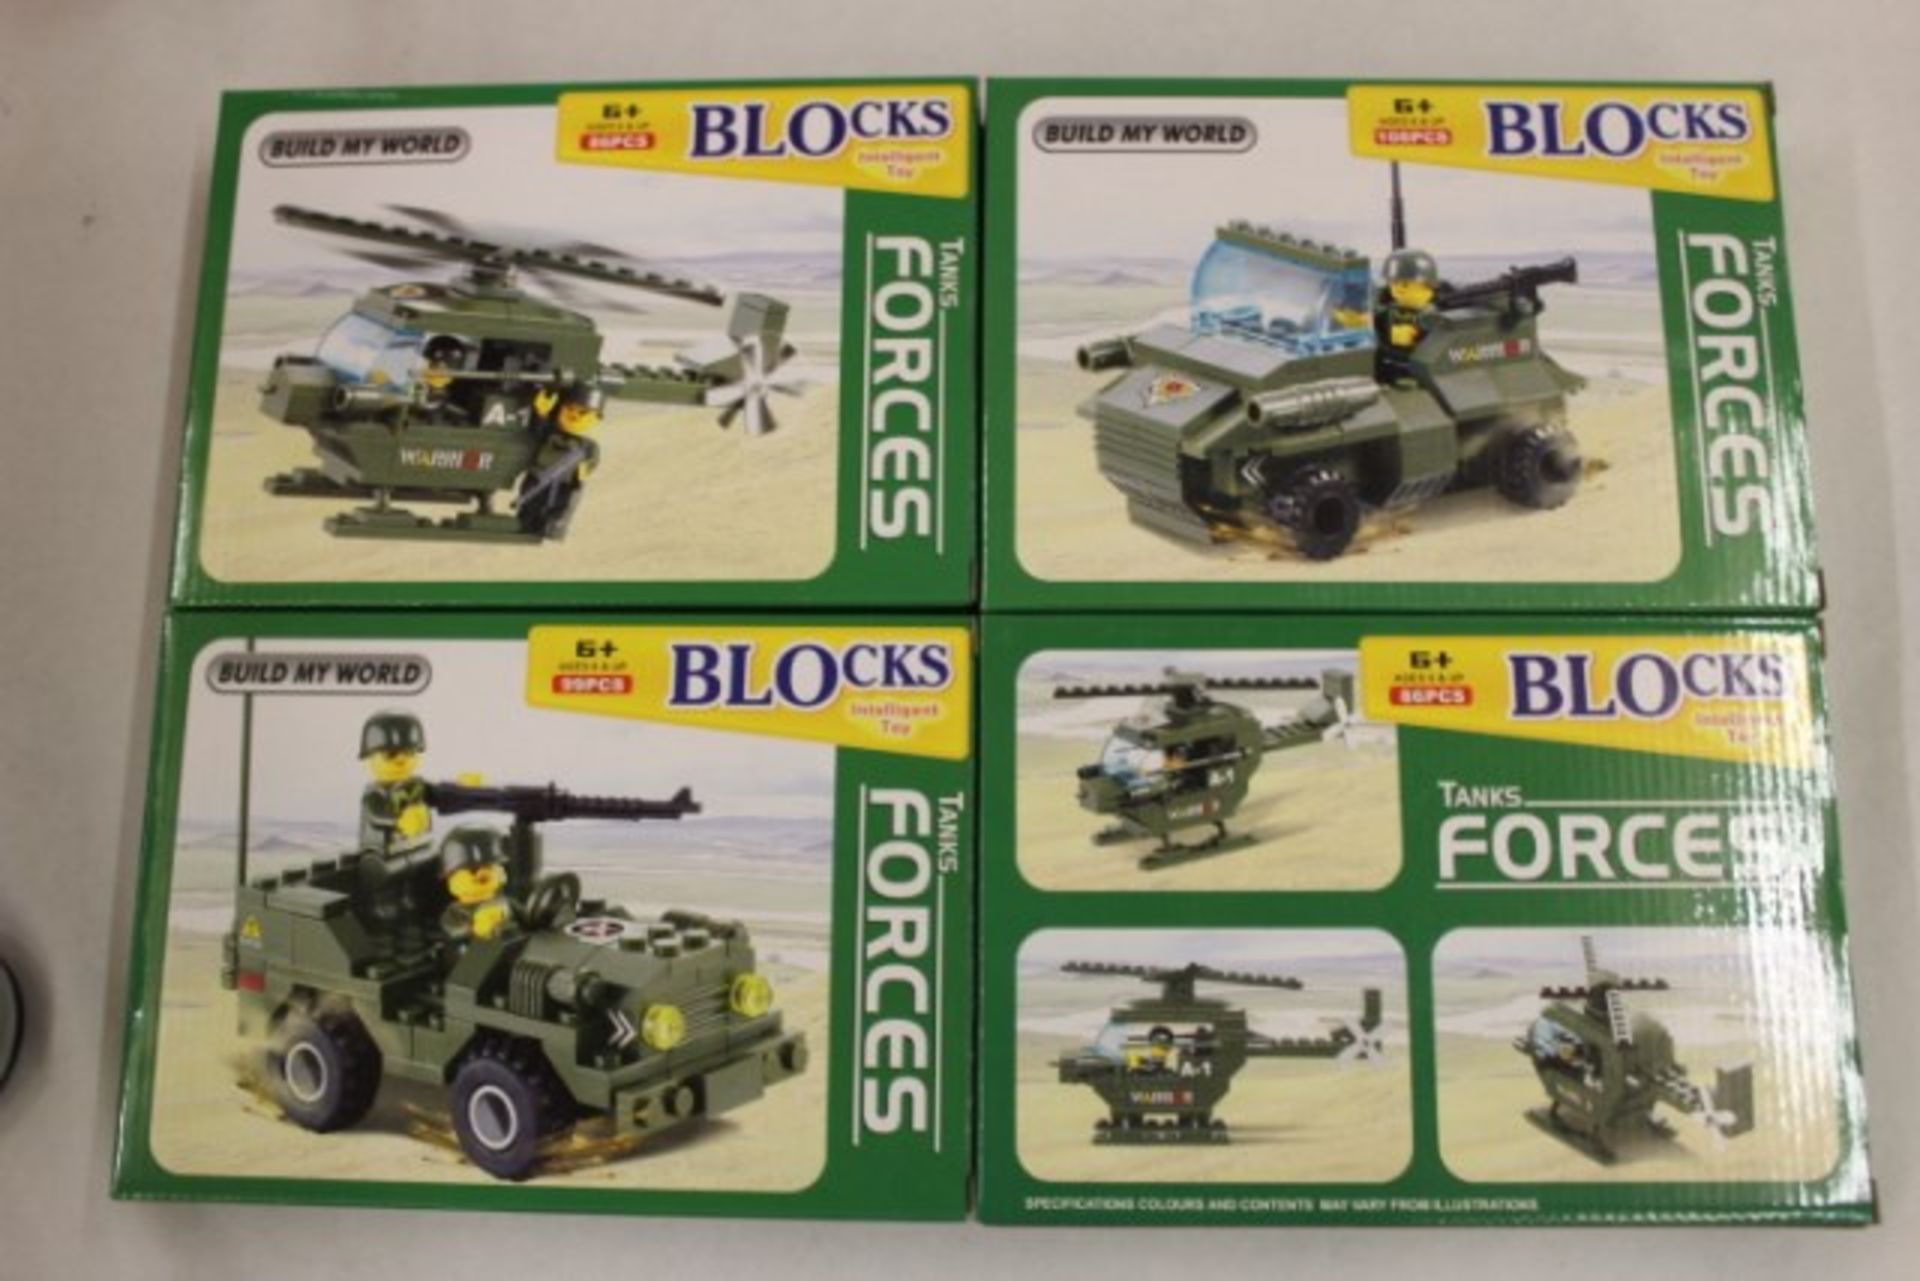 V *TRADE QTY* Brand New 89/99/108pc Army Building Block Kit Intelligent Toy (Similar Lego) X 5